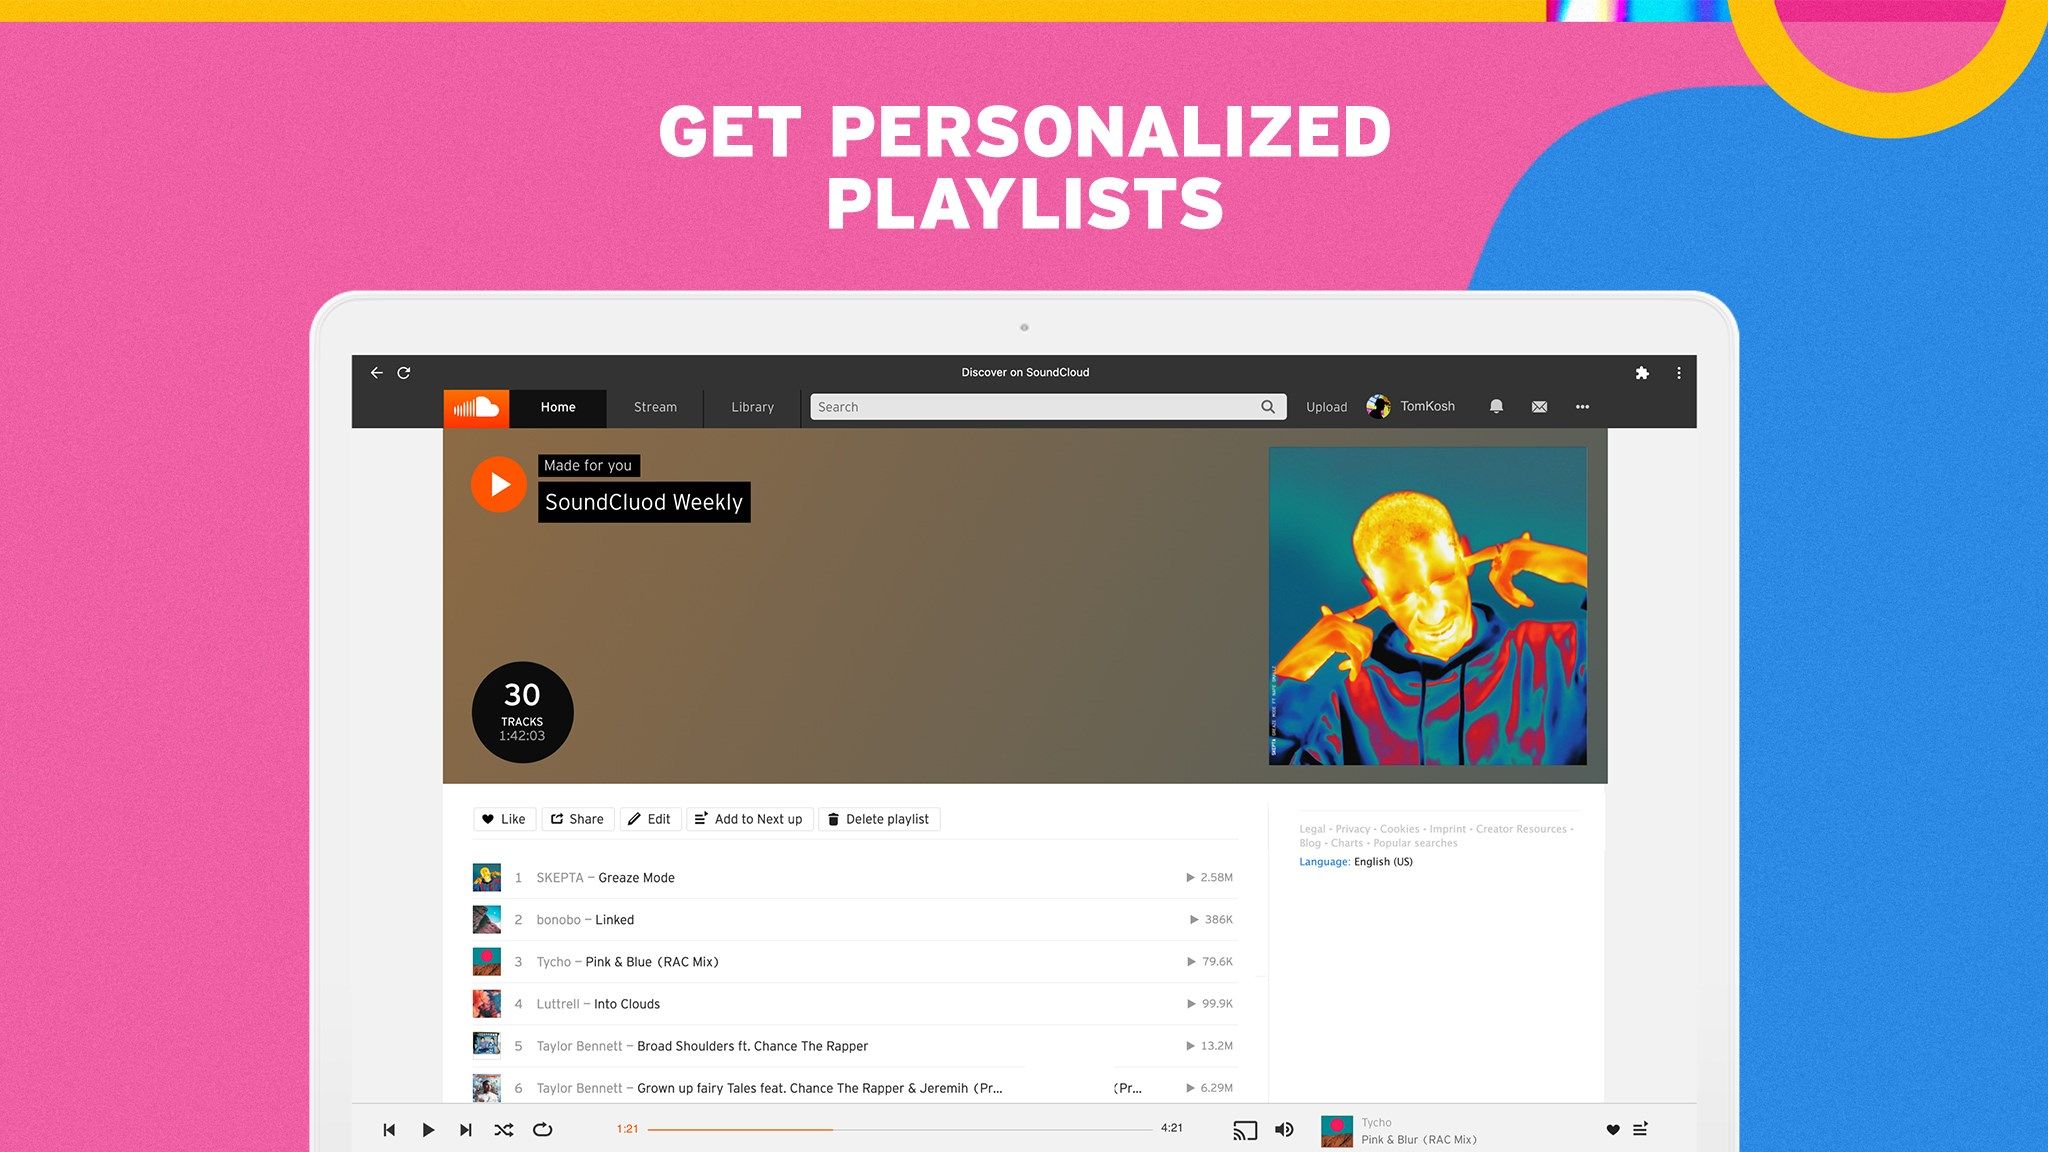 Get personalized playlists